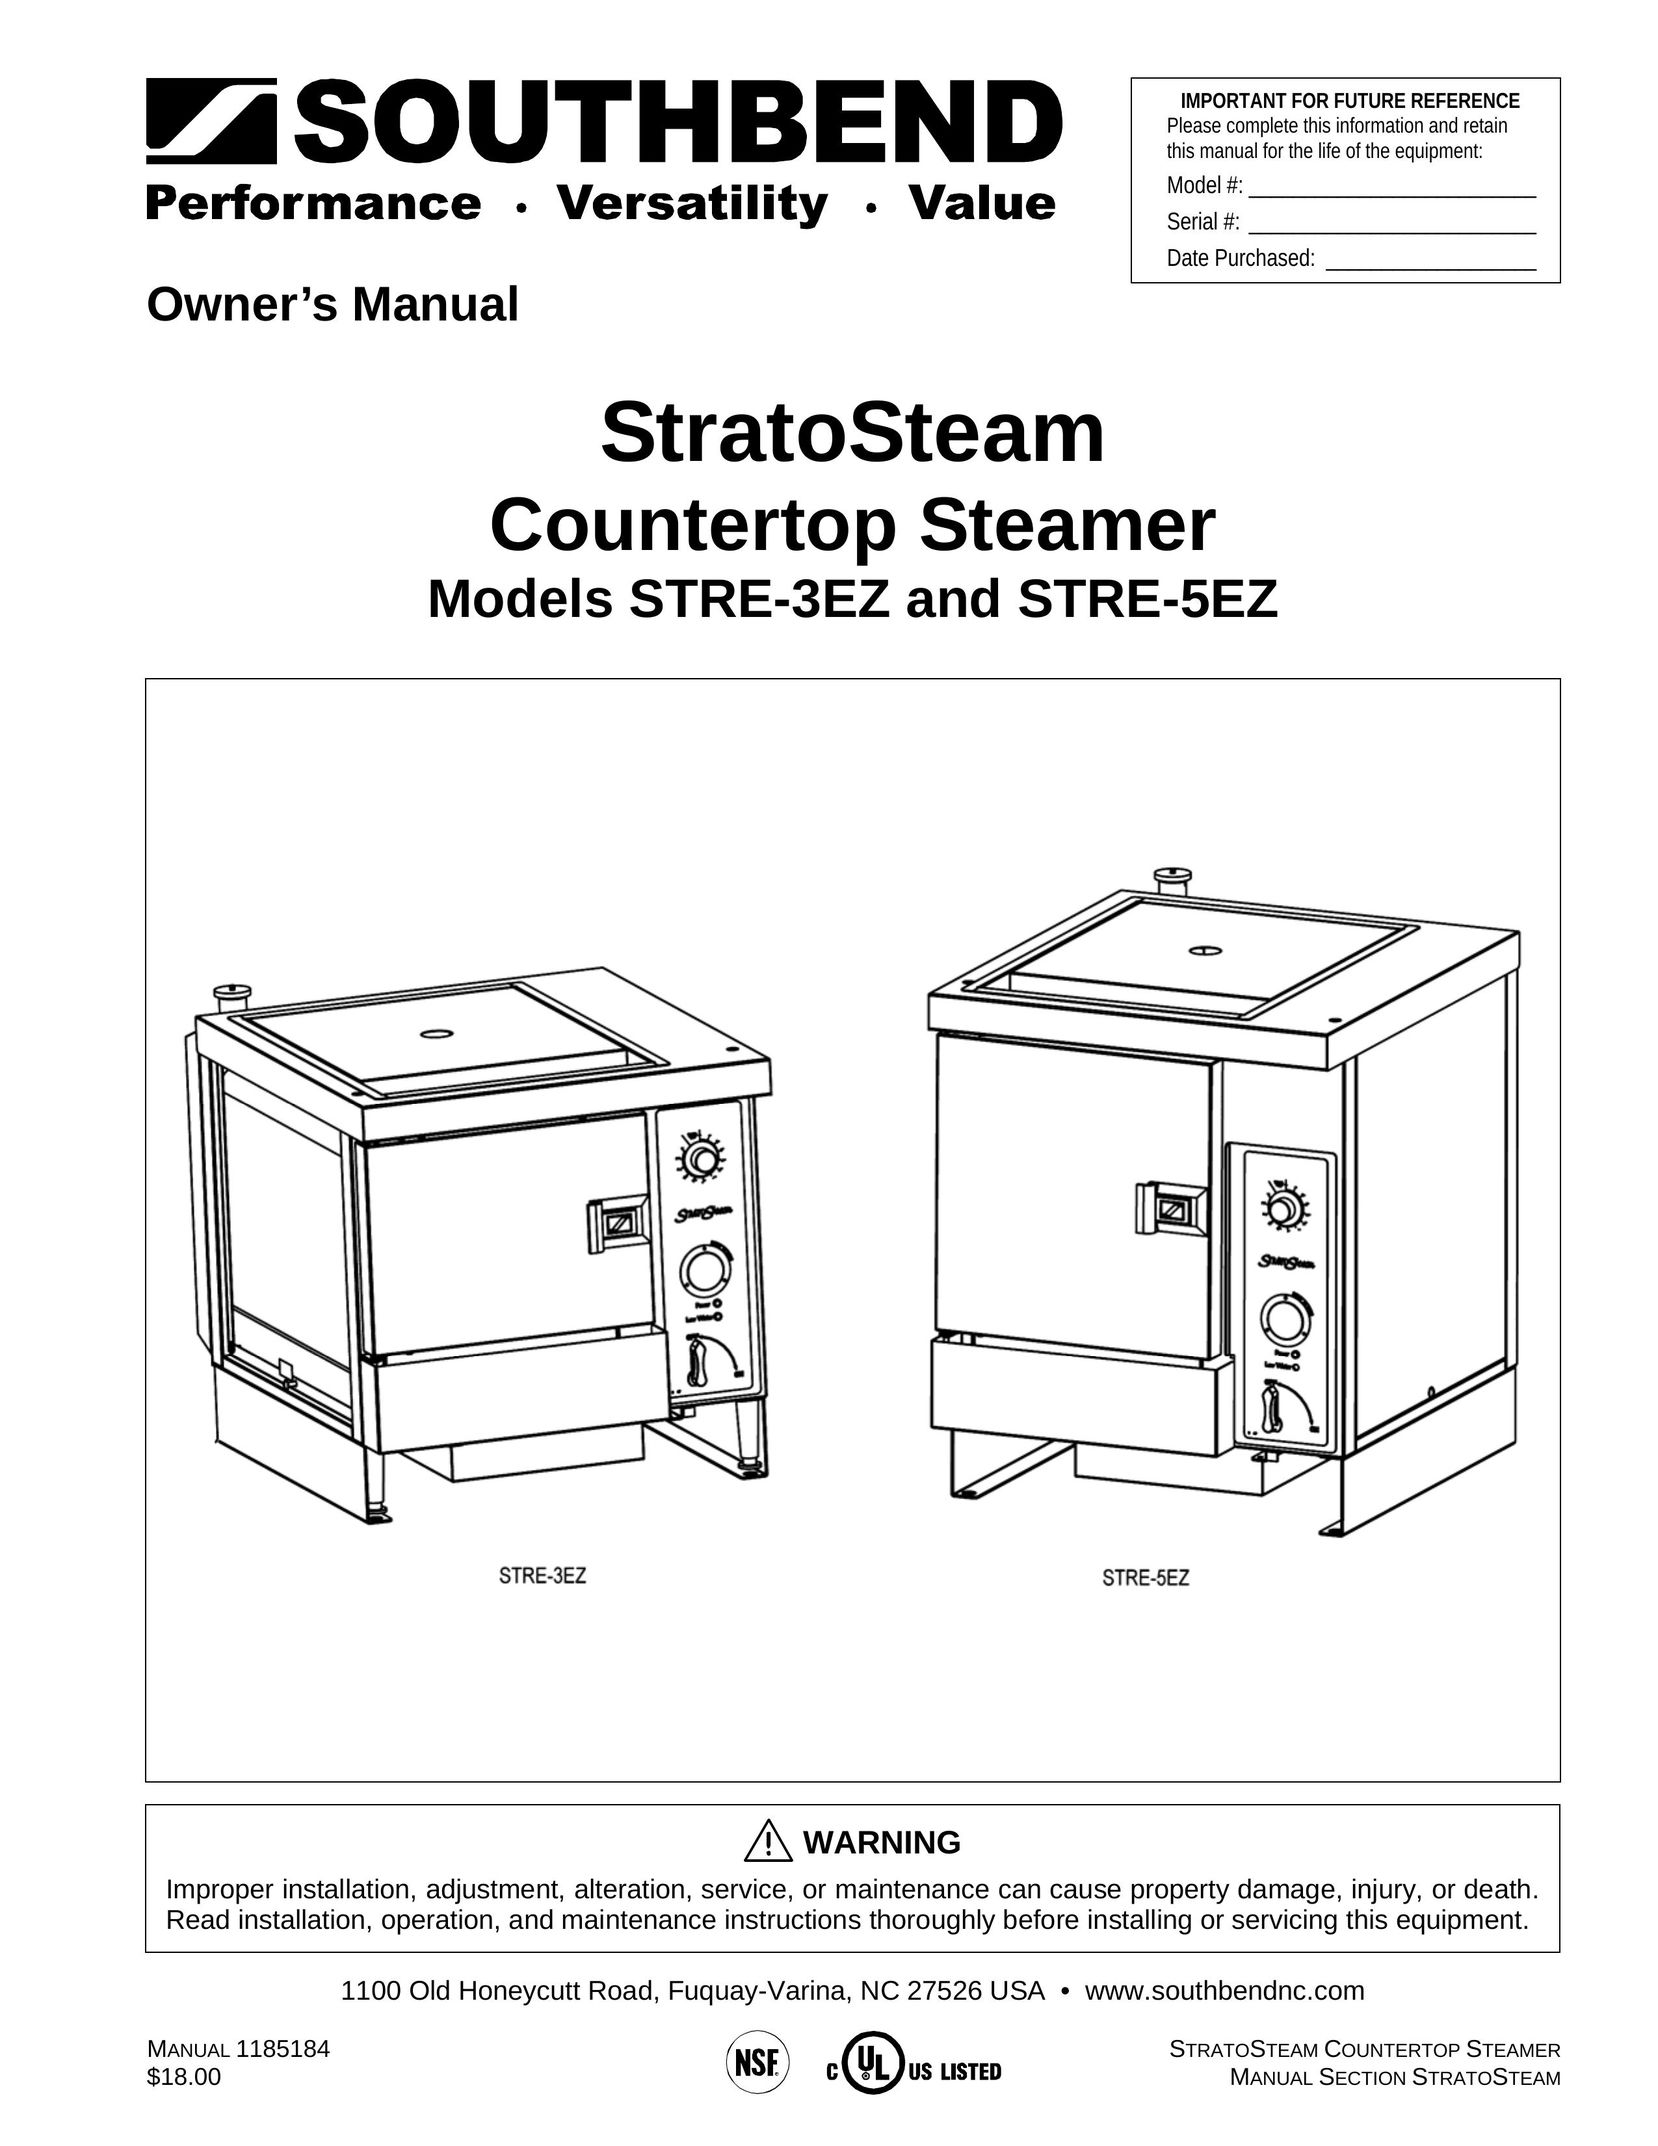 Southbend STRE-5EZ Electric Steamer User Manual